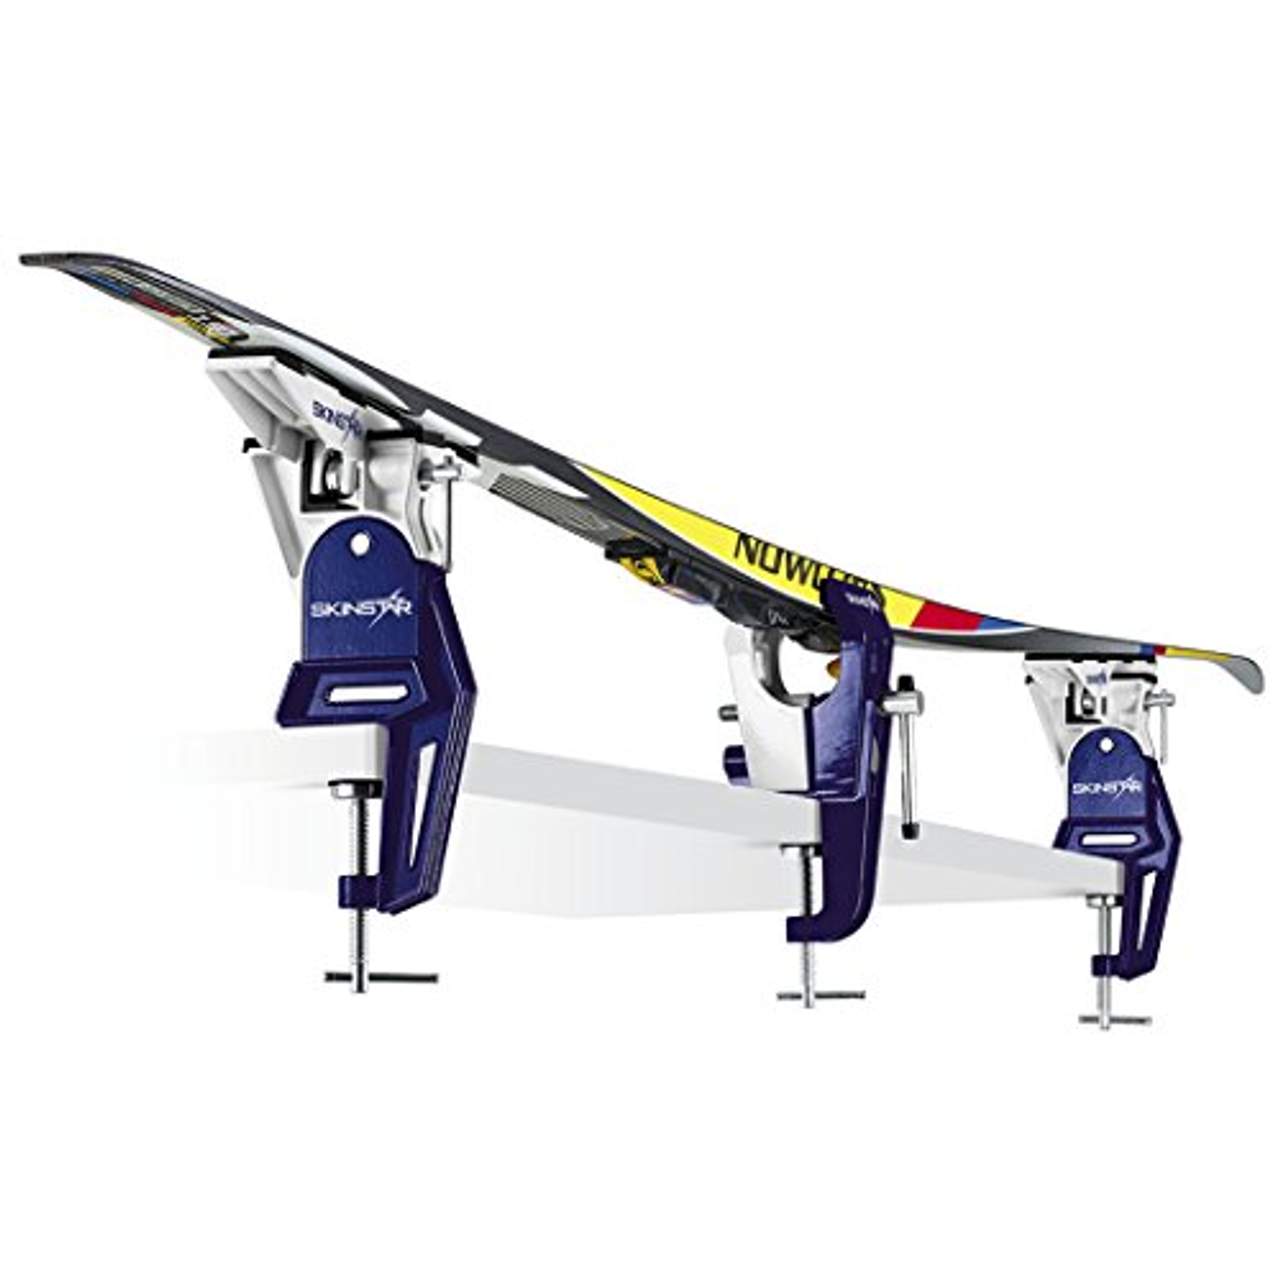 SkinStar Racing Ski Vise WorldCup Special Skispanner